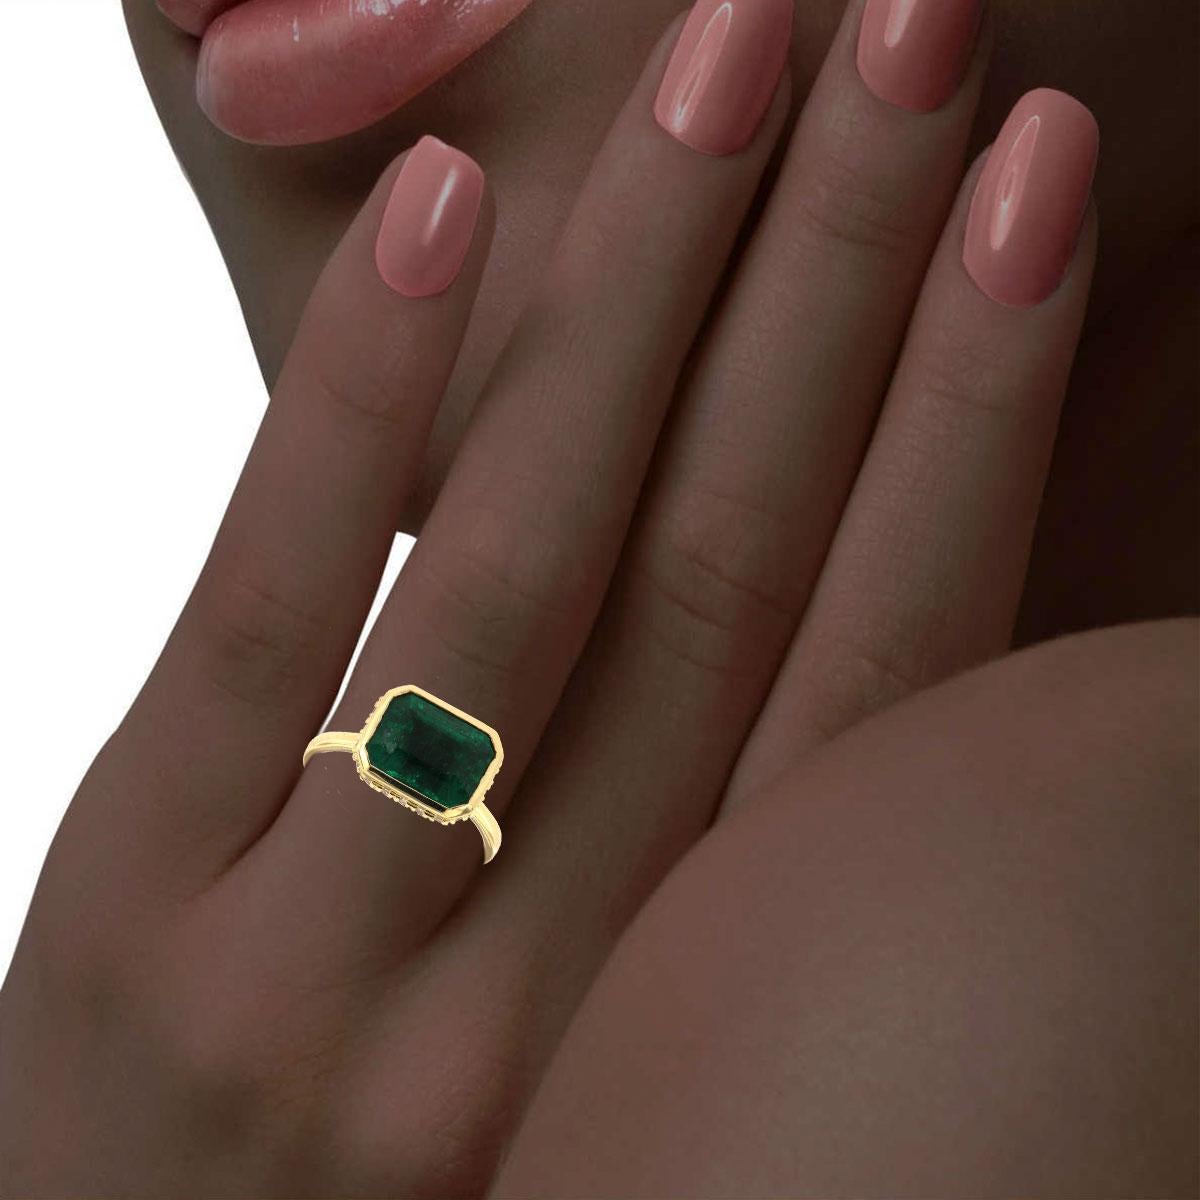 Emerald Cut GIA Certified 3.93 Carat Green Emerald Bezel Set in 18K Yellow Gold Diamond Ring For Sale